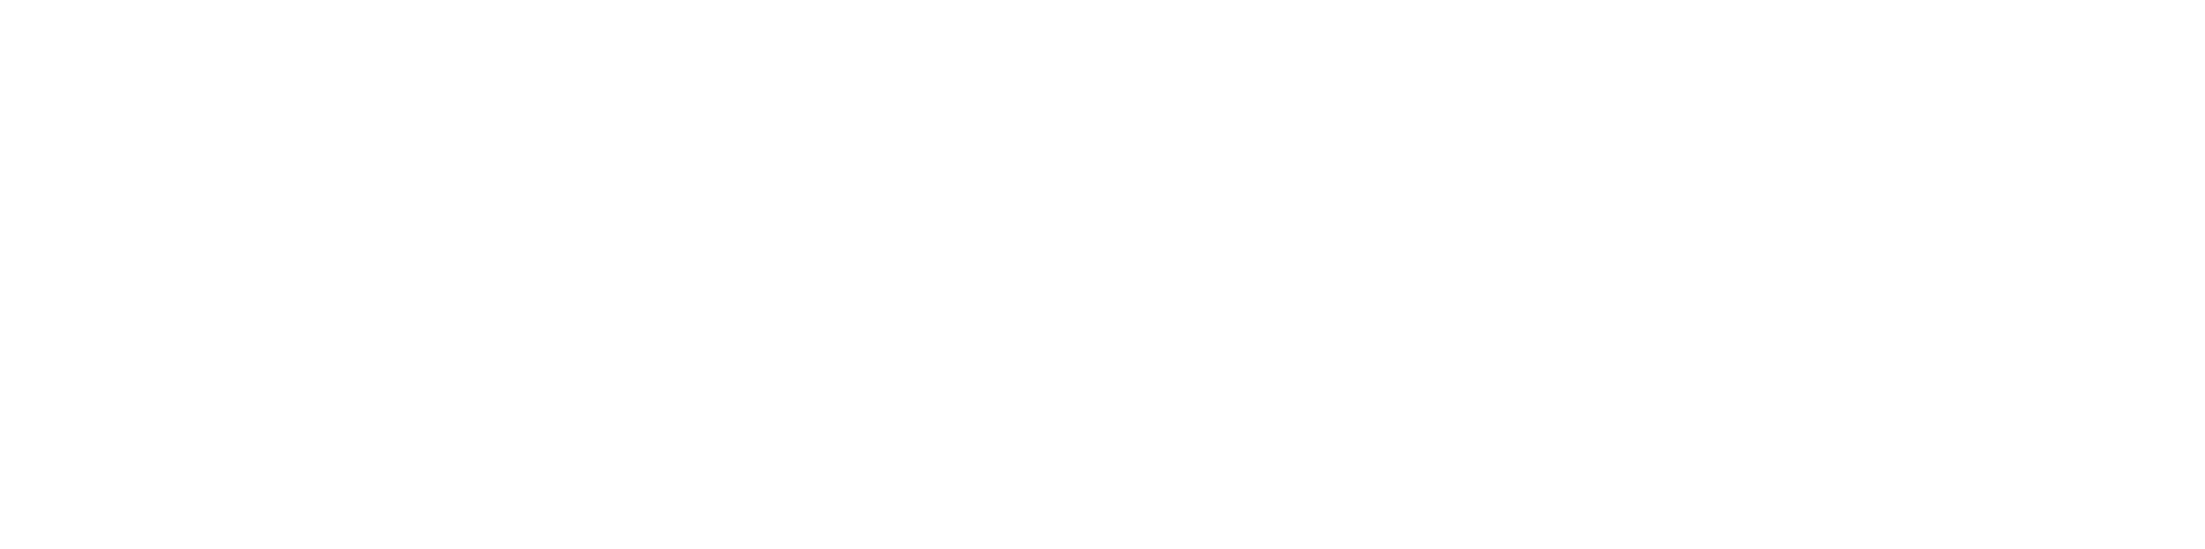 South Bend International airport logo white